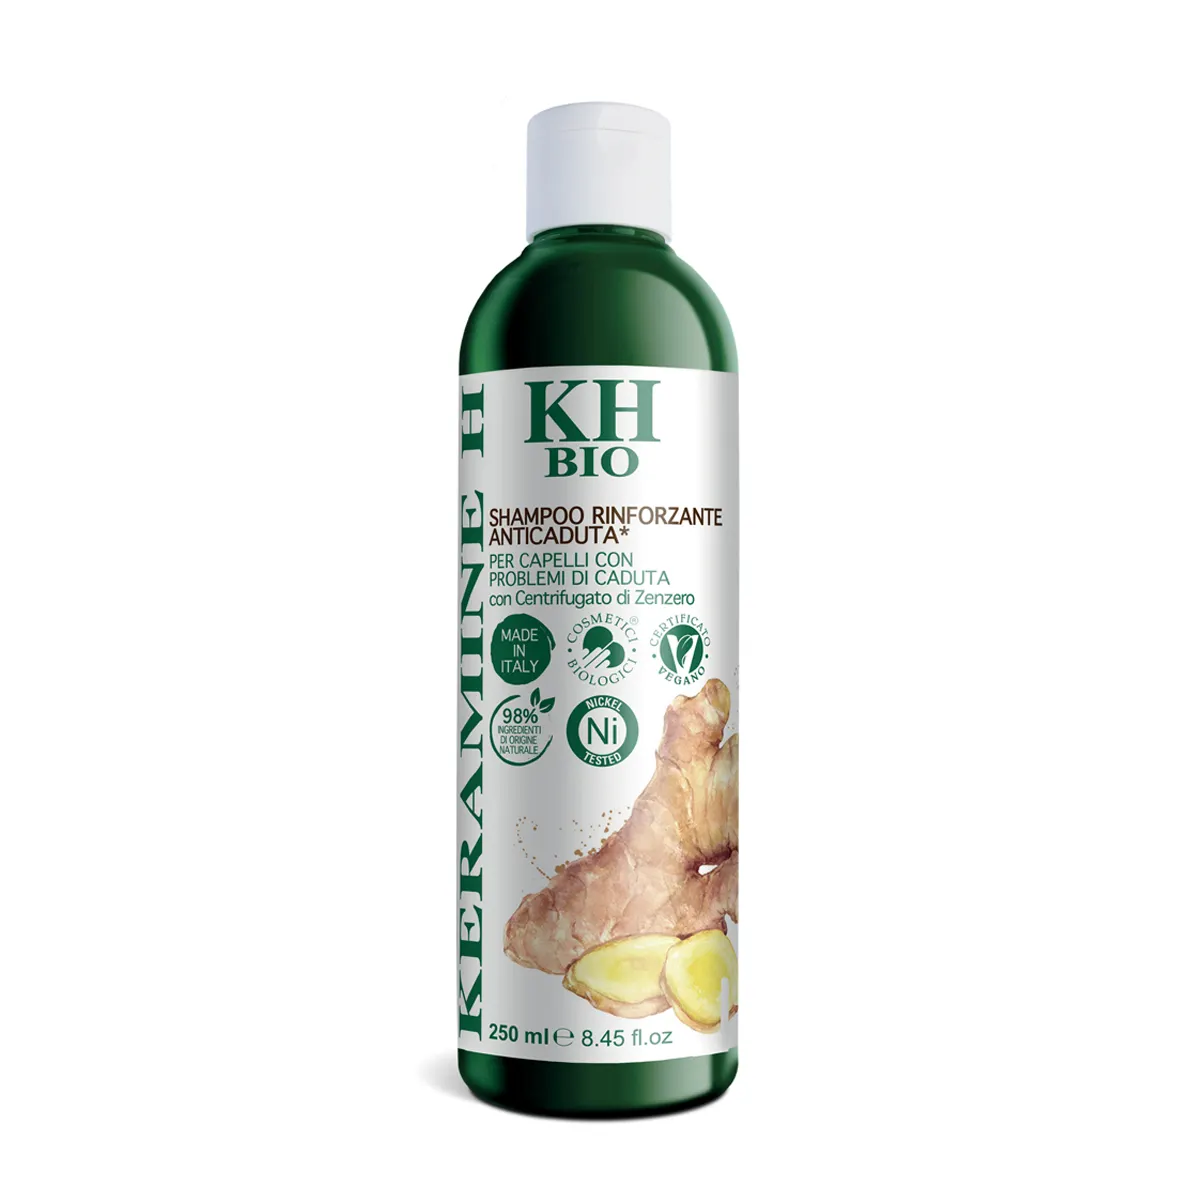 Rinforzante organico Shampoo Anti-perdita di capelli per problemi di perdita di capelli 250 ml Made in Italy vegan Nickel testato naturale